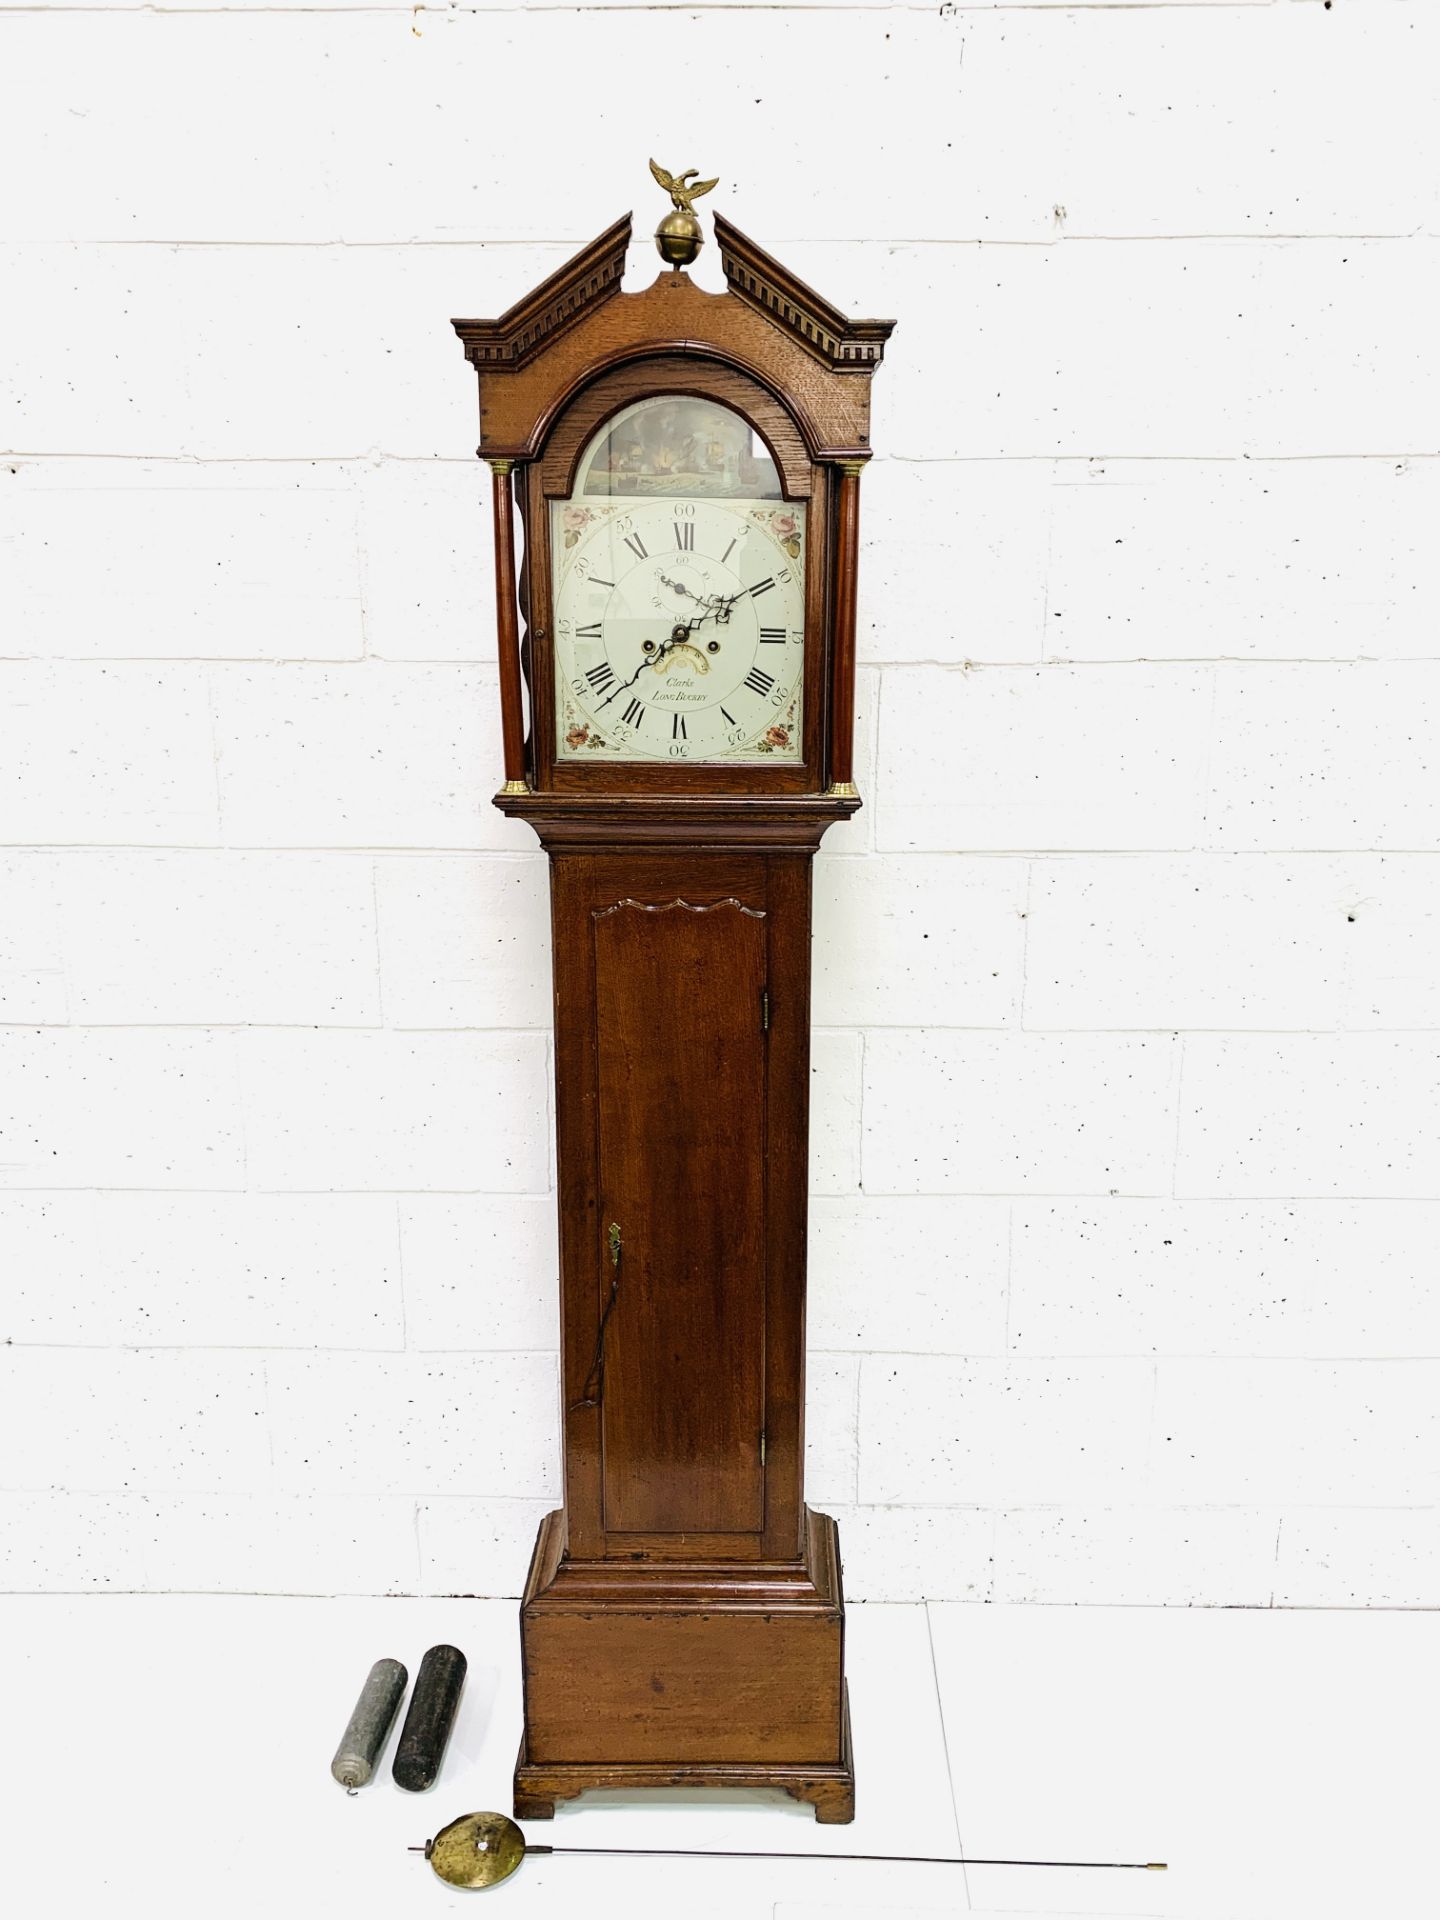 Mahogany long case clock by Clarke of Long Buckby, movement by Wilson